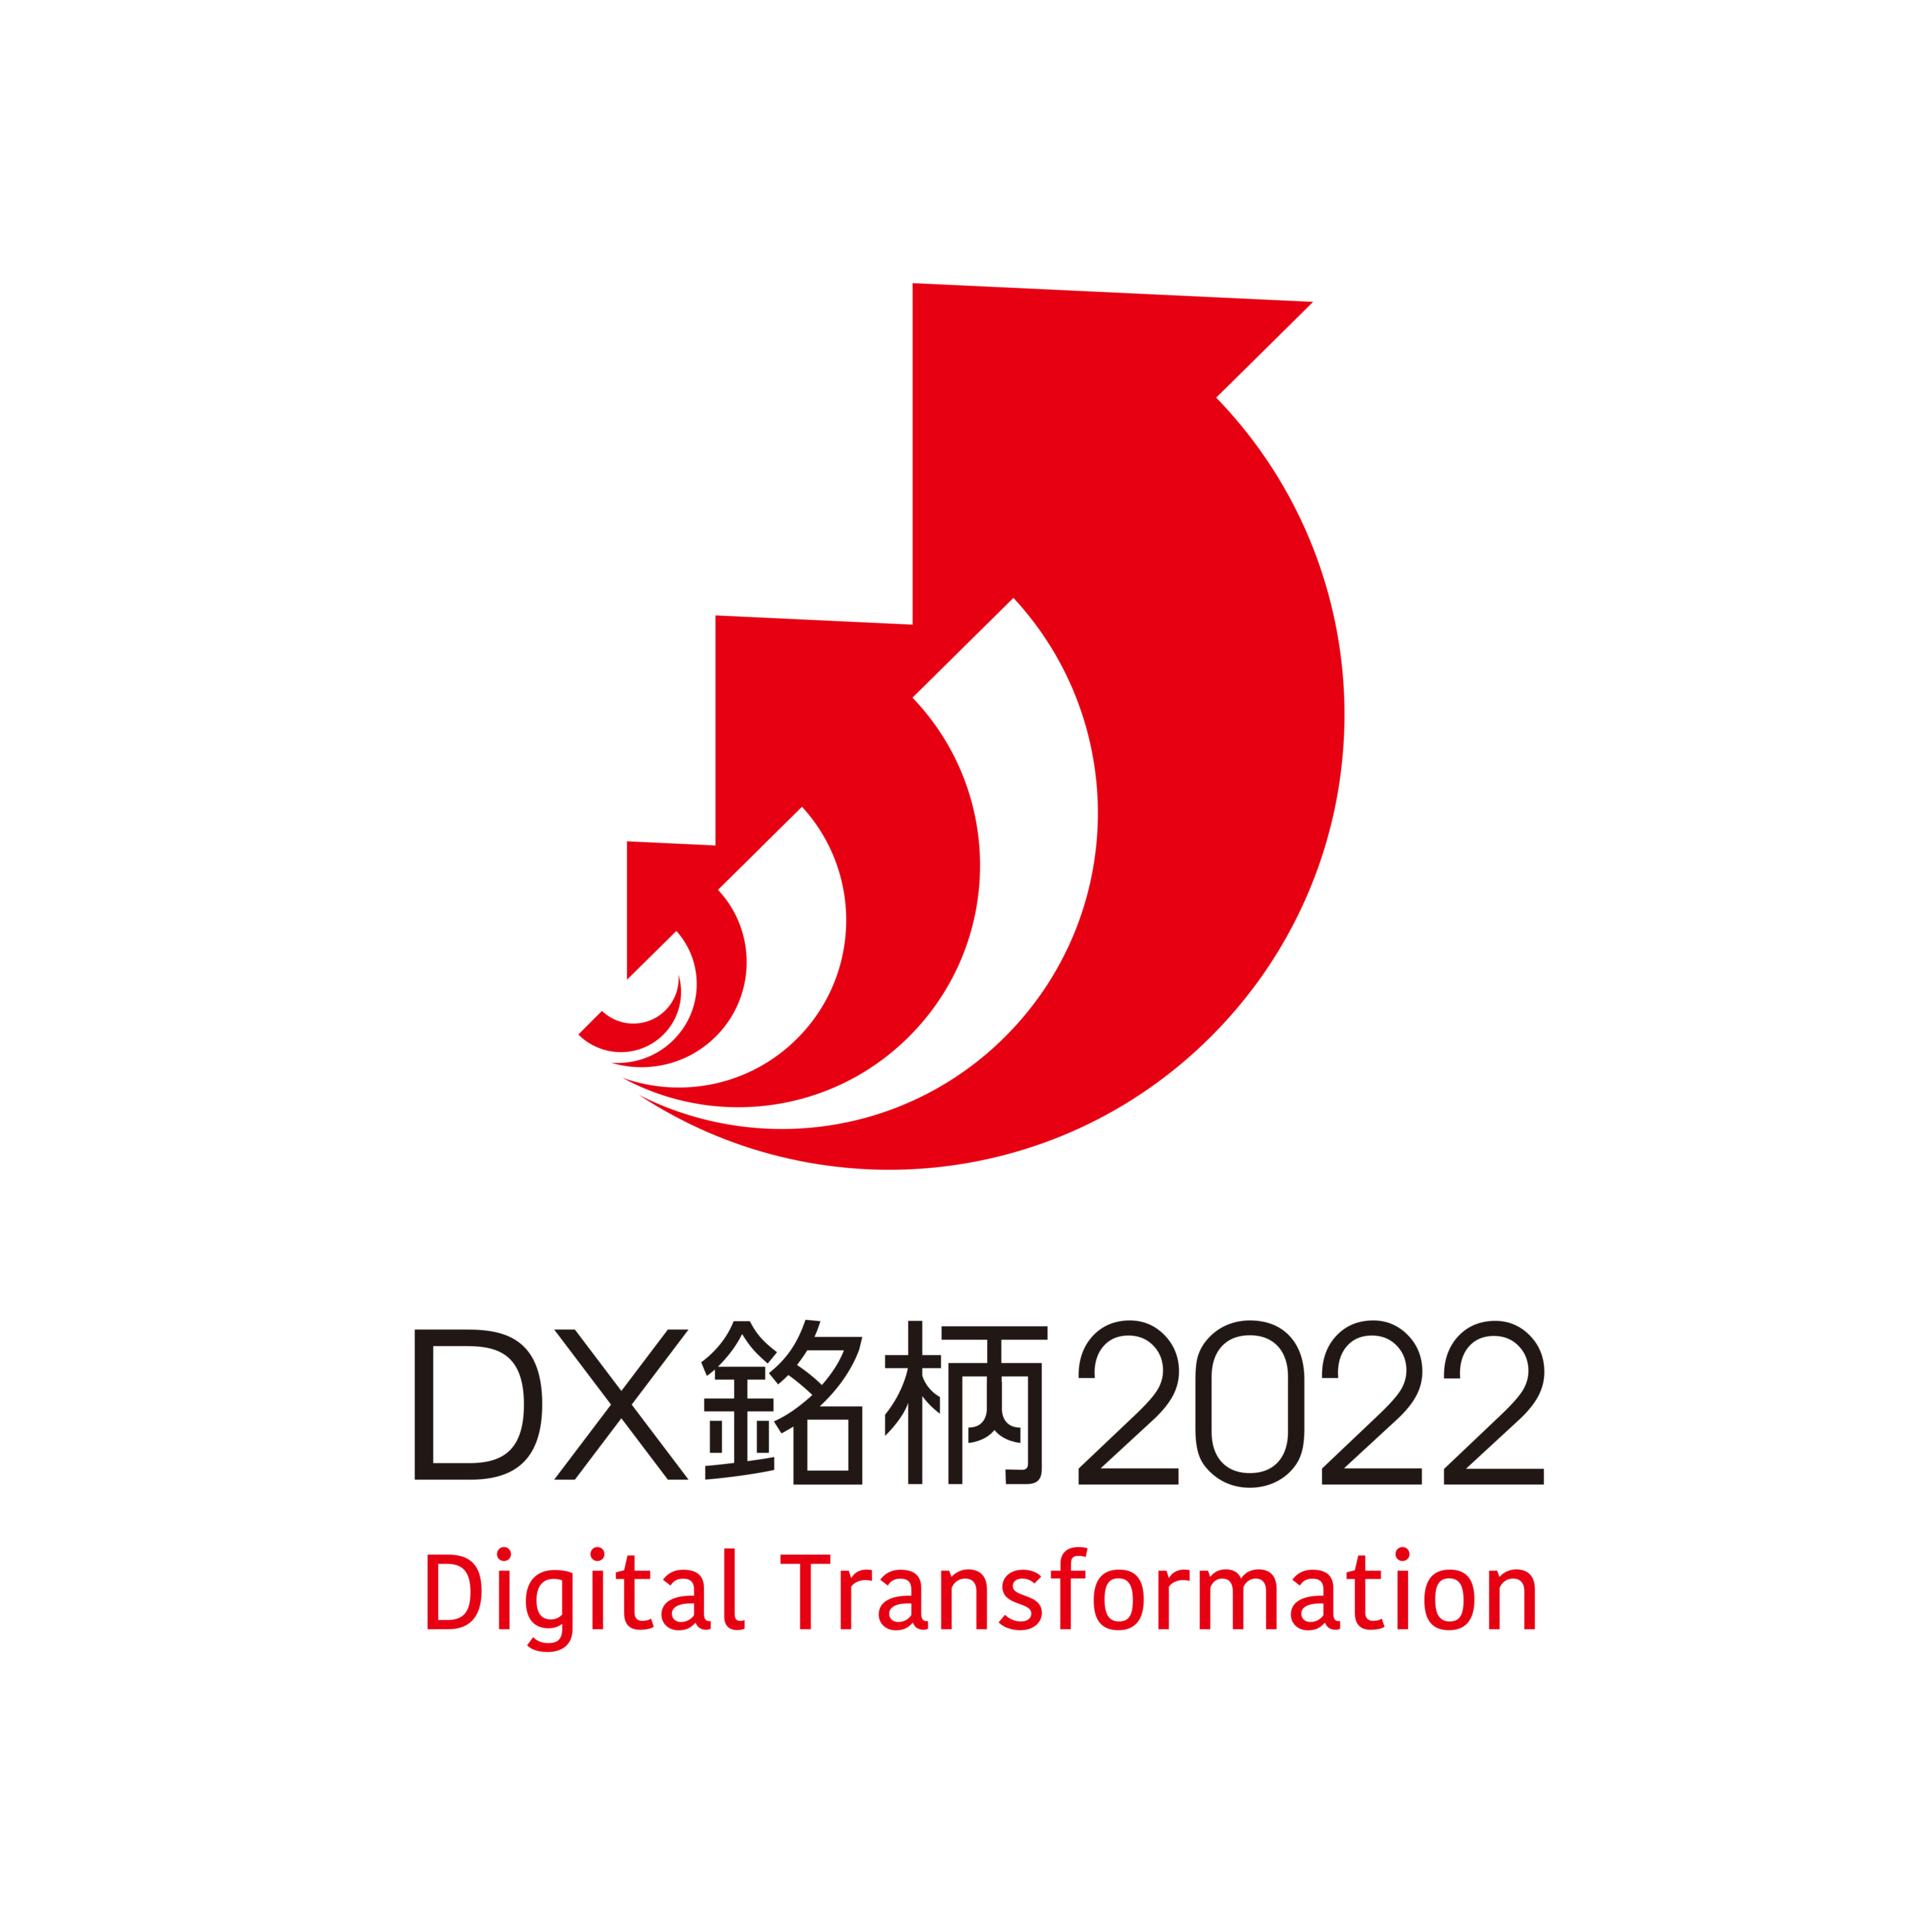 DX銘柄2022ロゴ